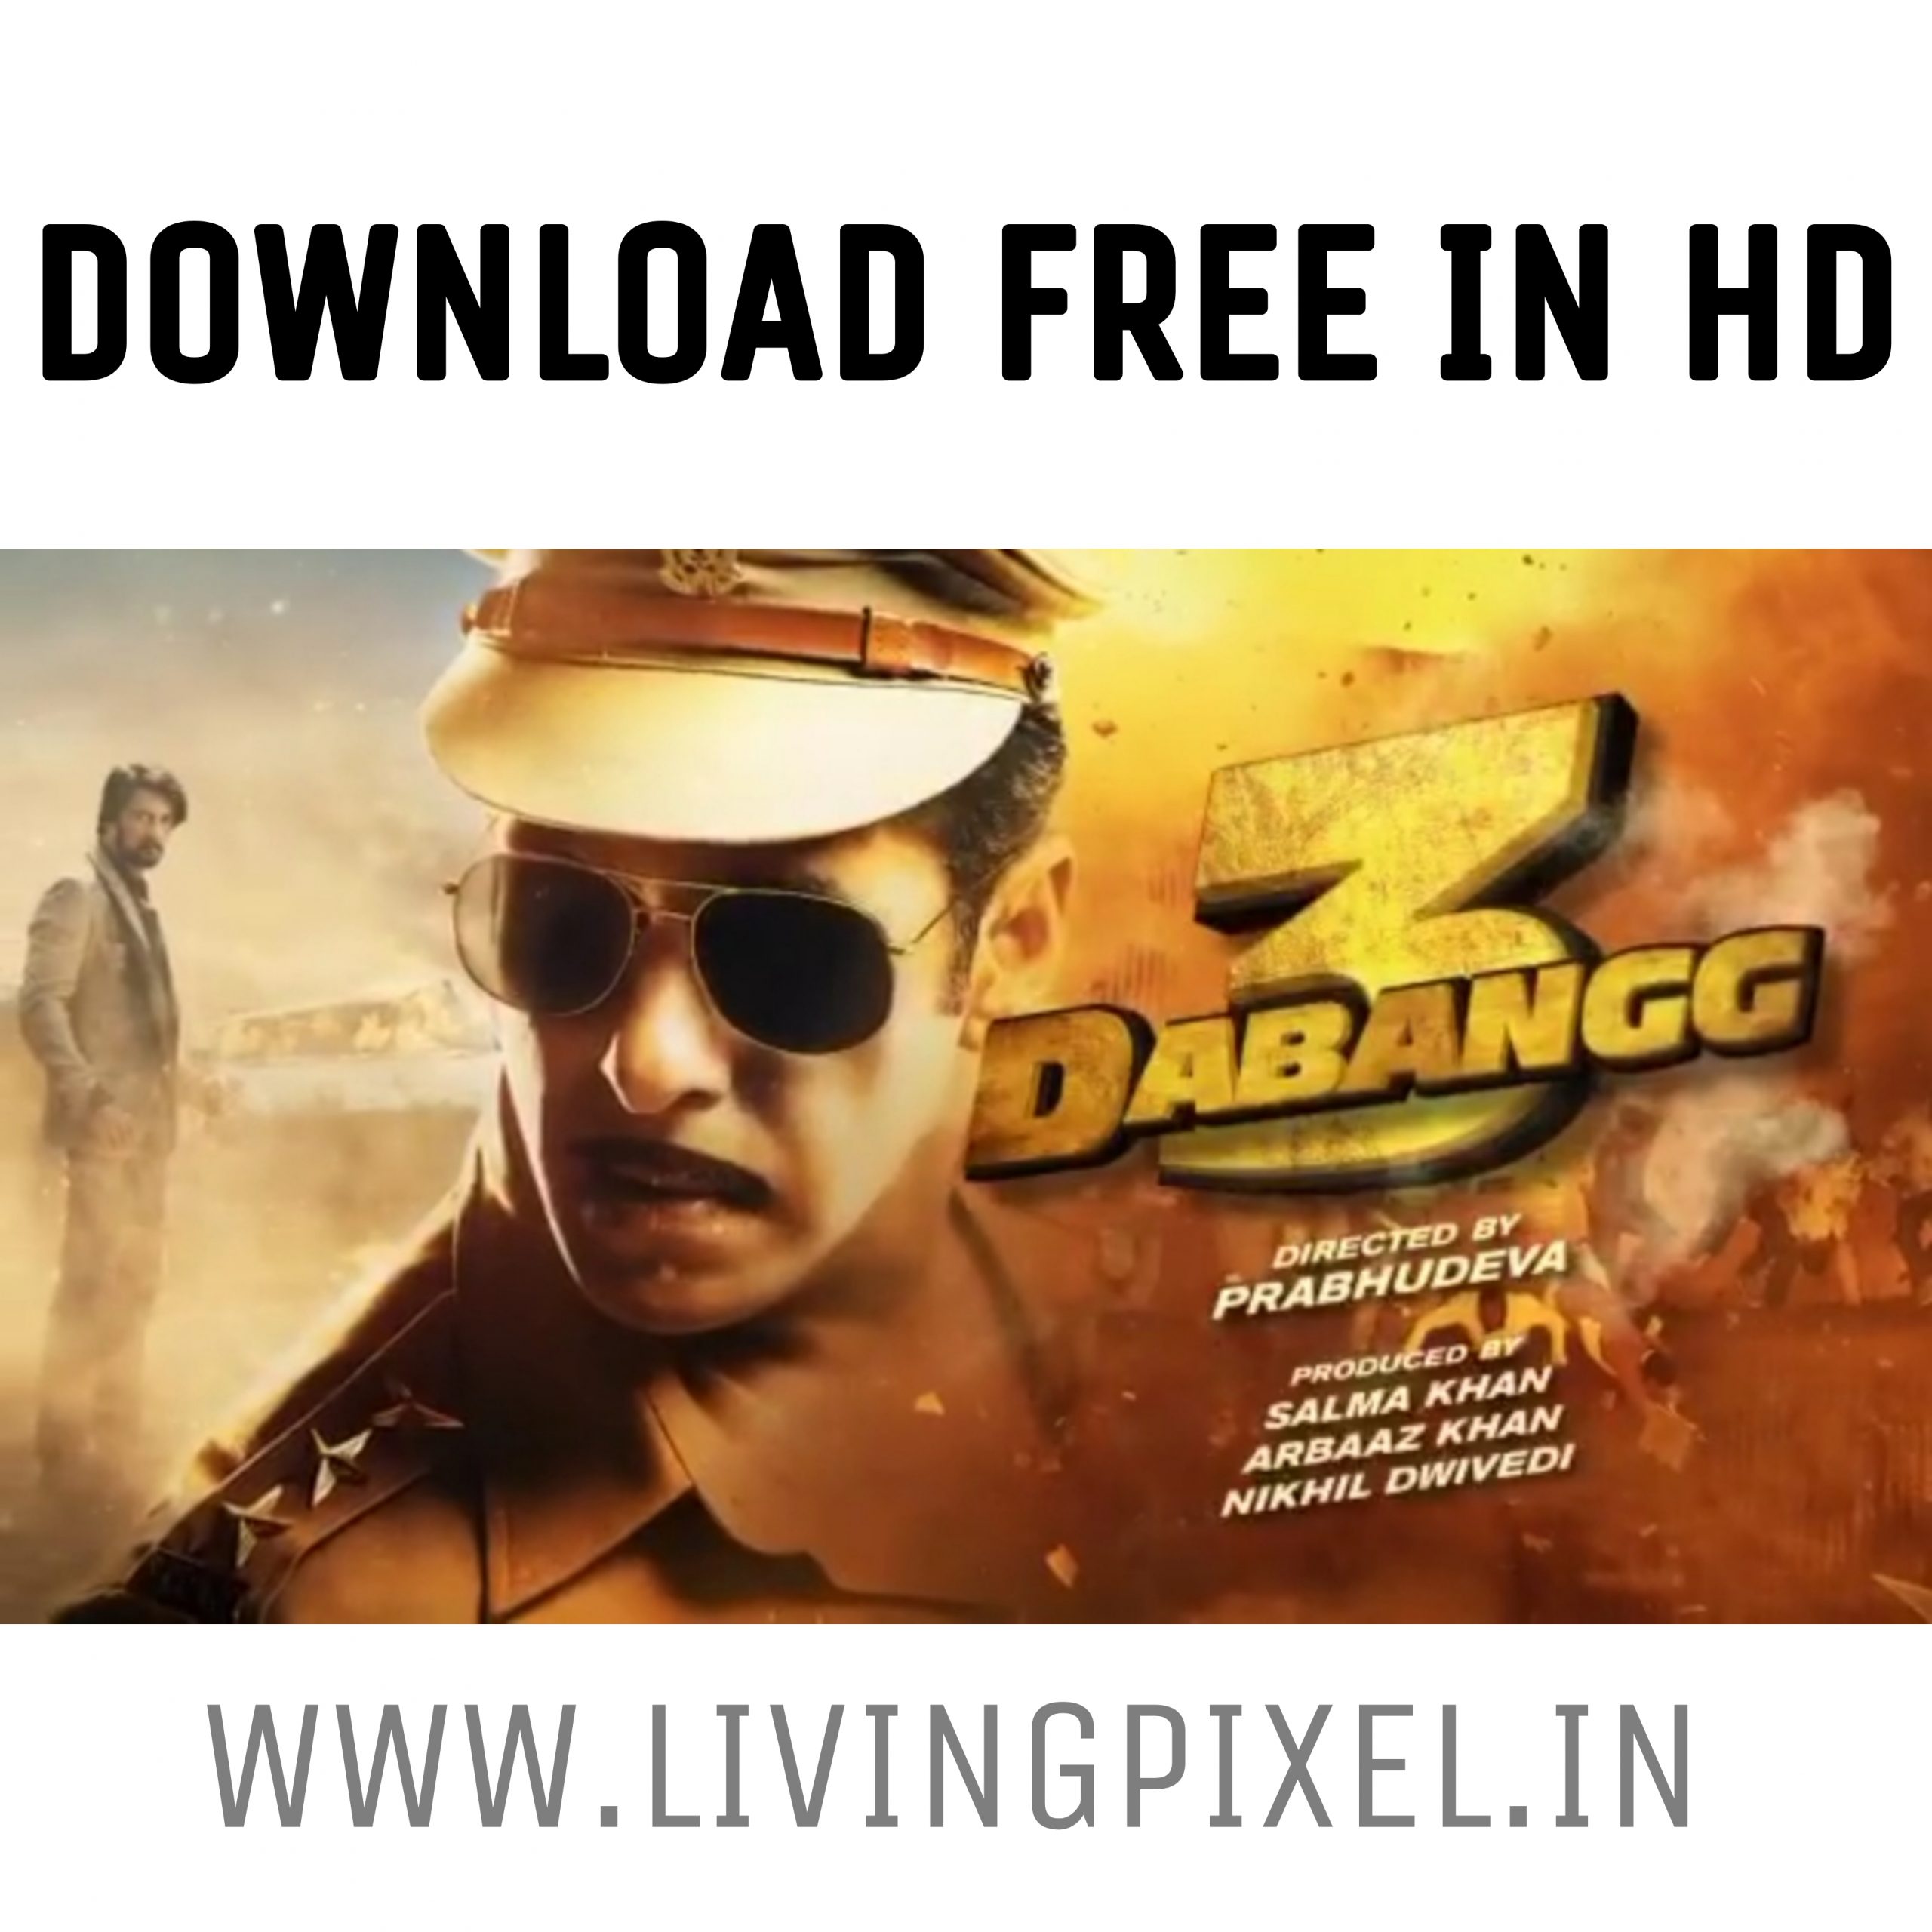 Dabangg 3 movie download Telegram in HD